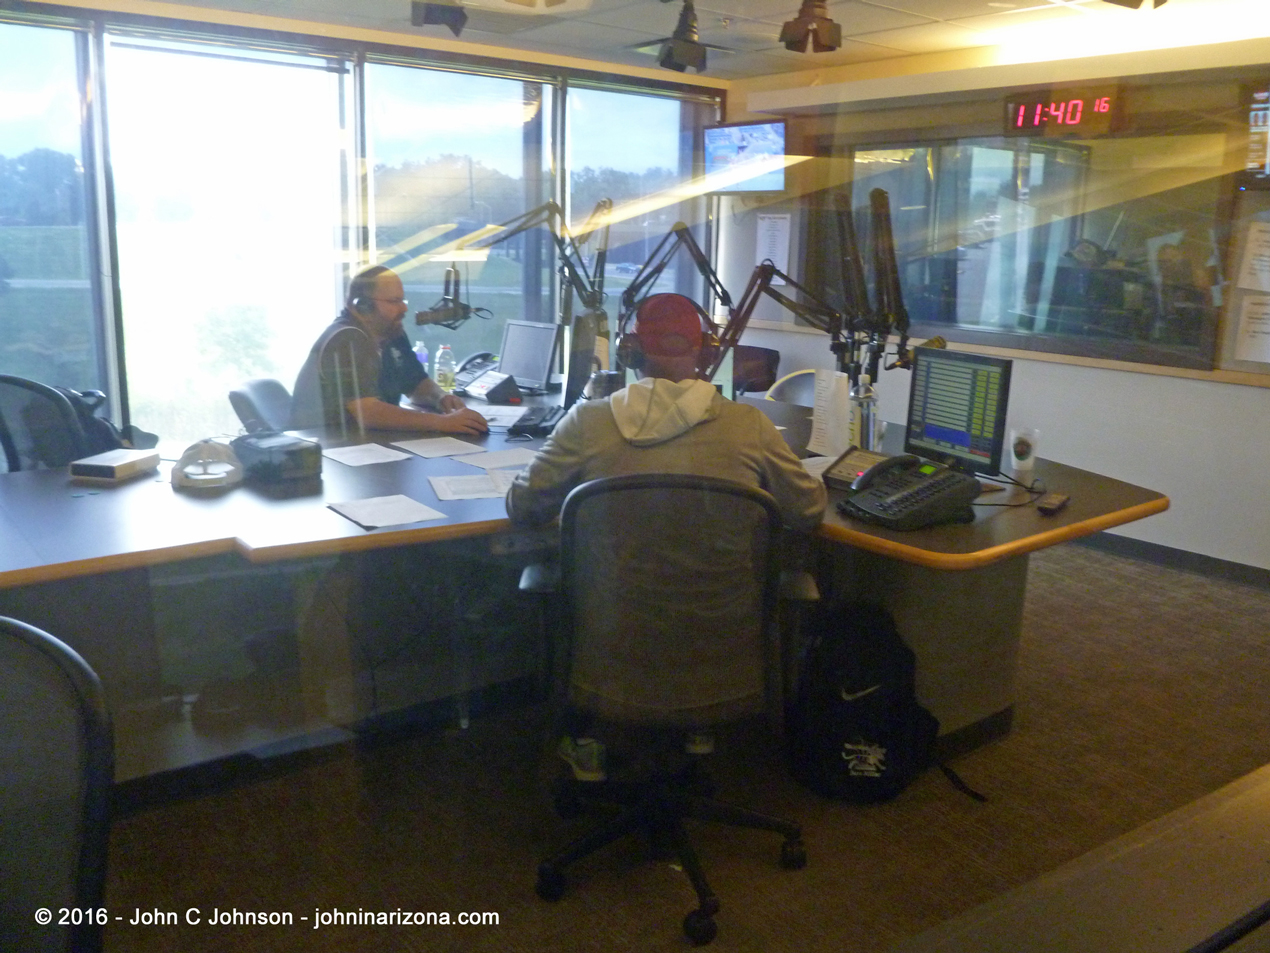 KCSP Radio 610 Kansas City, Missouri